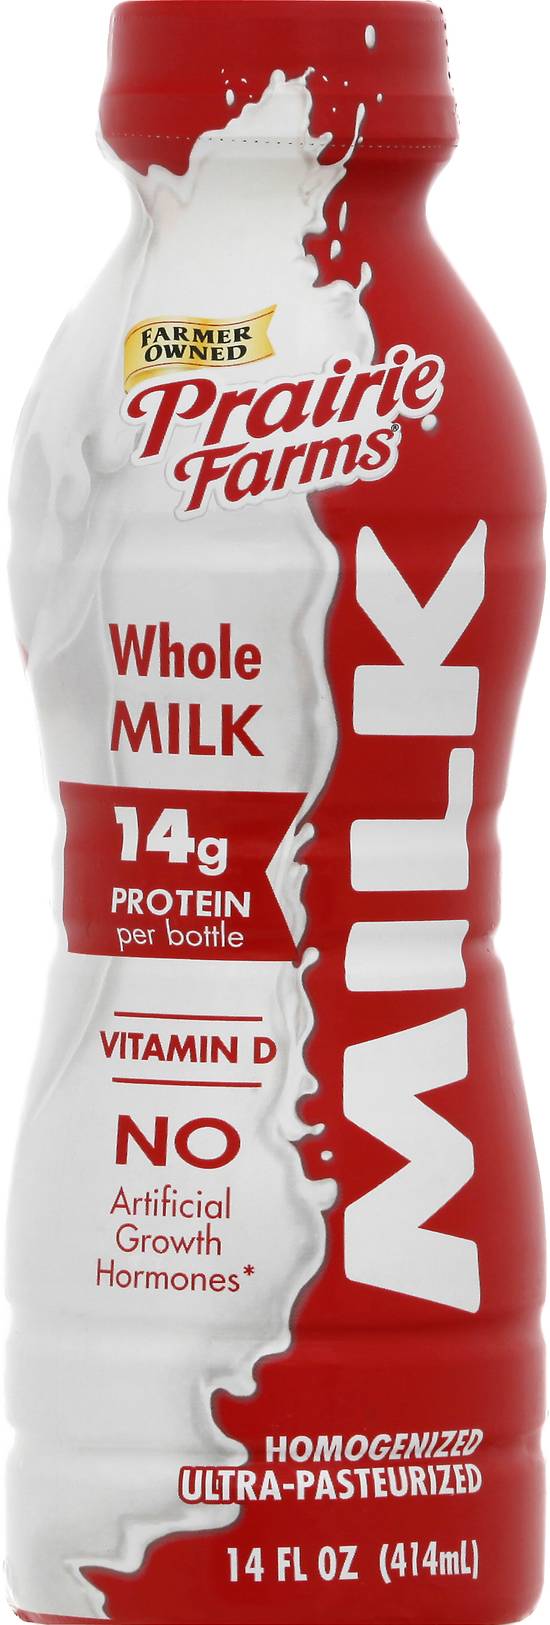 Prairie Farms Milk Whole Bottle (14 fl oz)